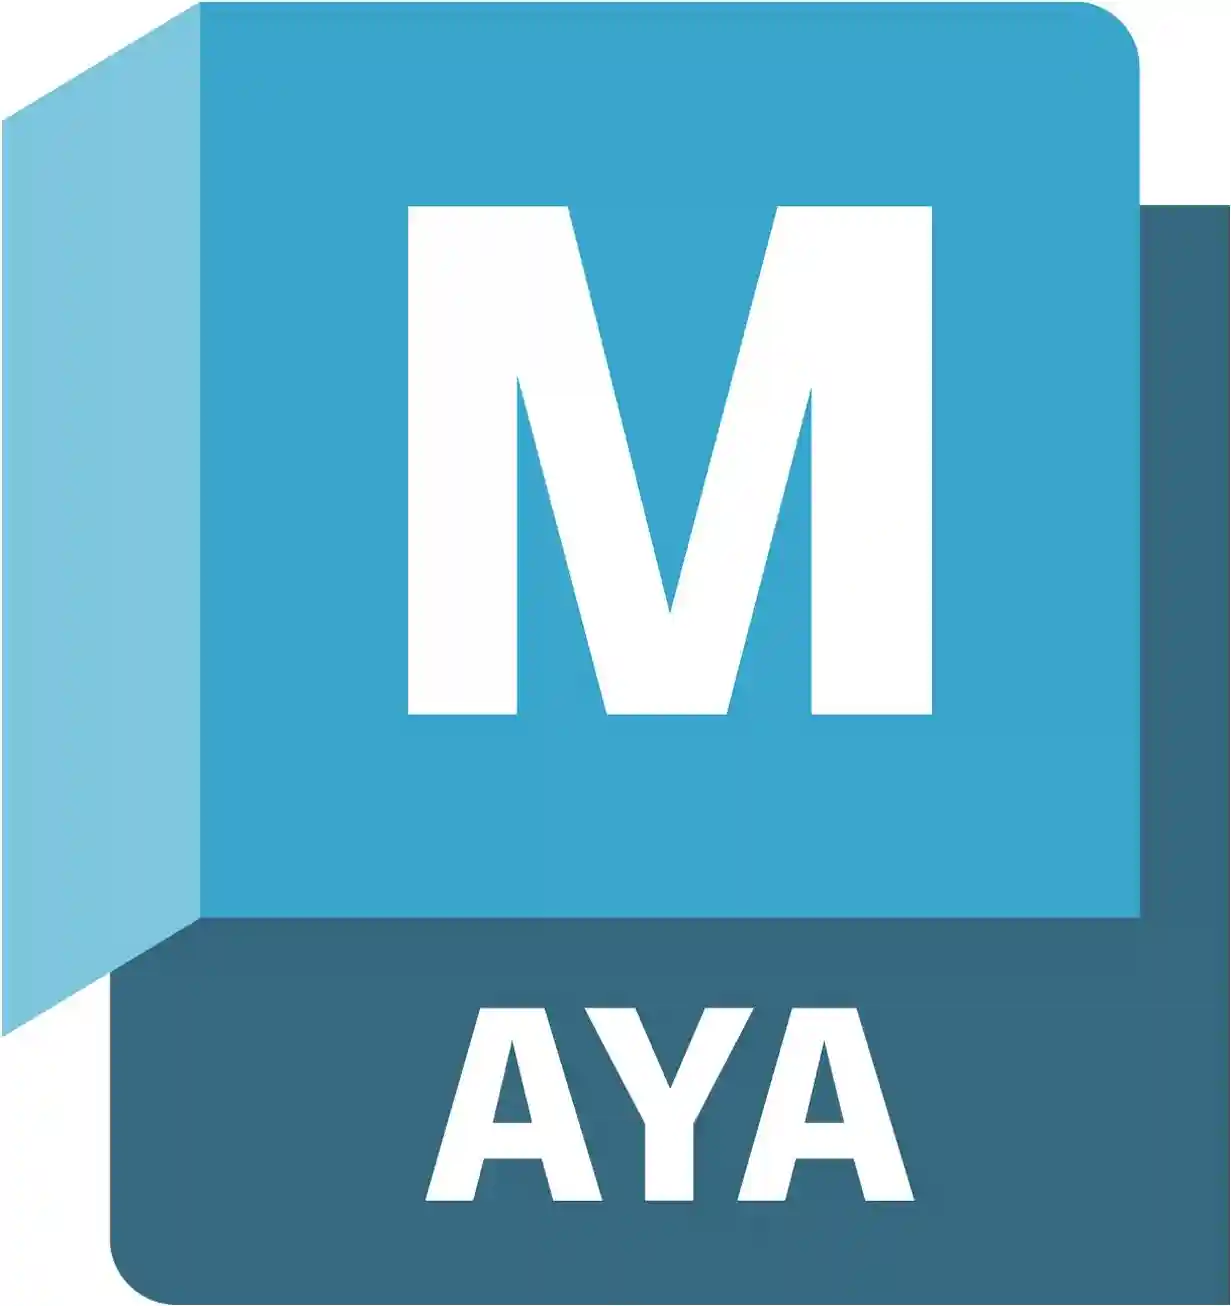 Autodesk Maya For Mac